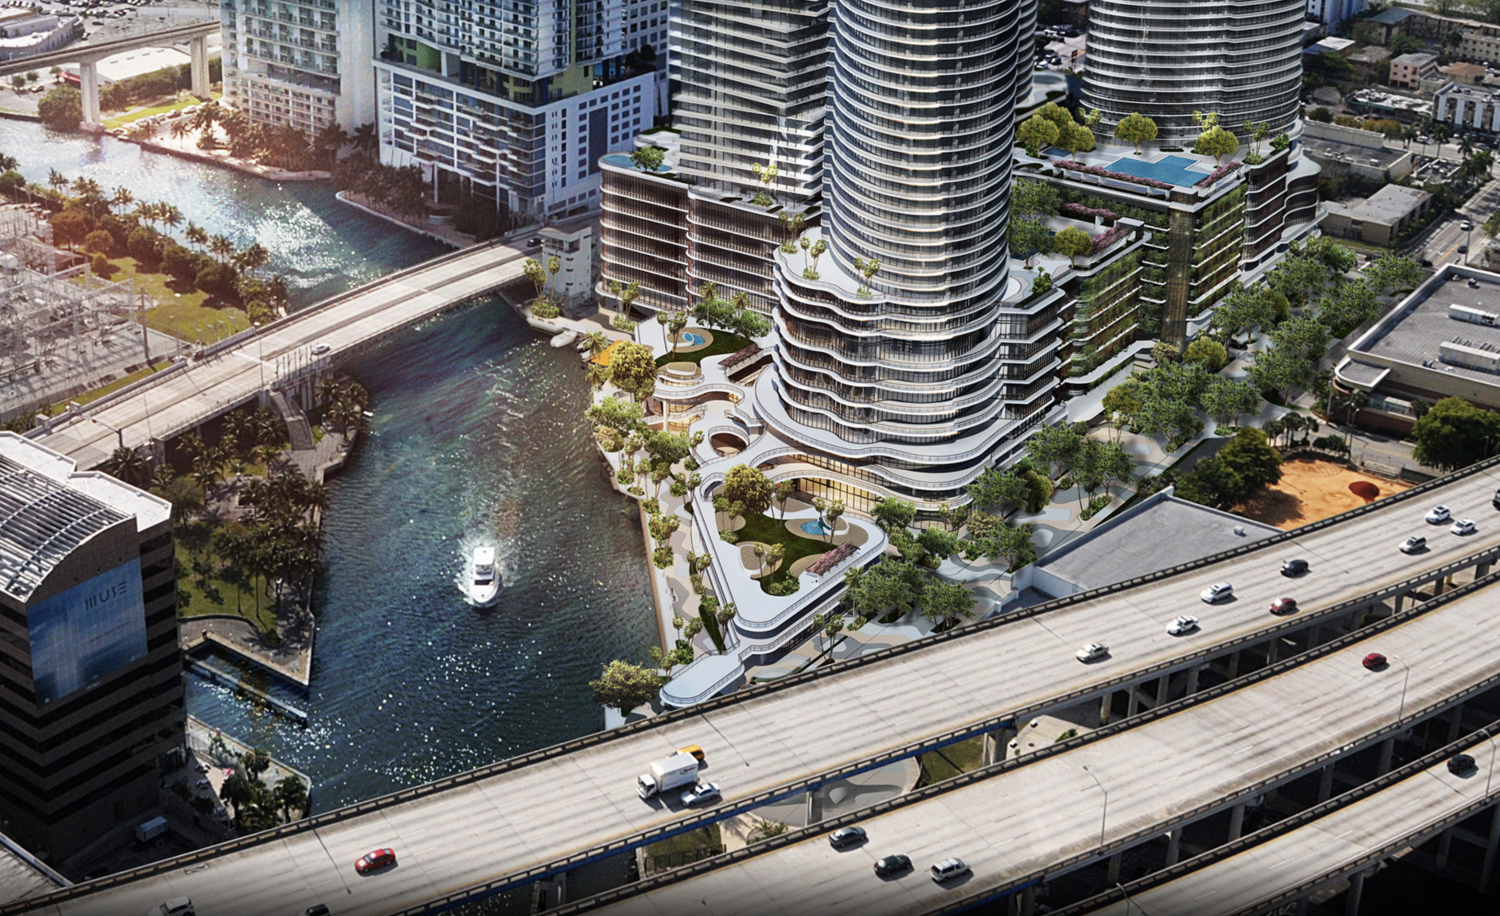 Miami Riverwalk Towers. Designed by Kobi Karp.